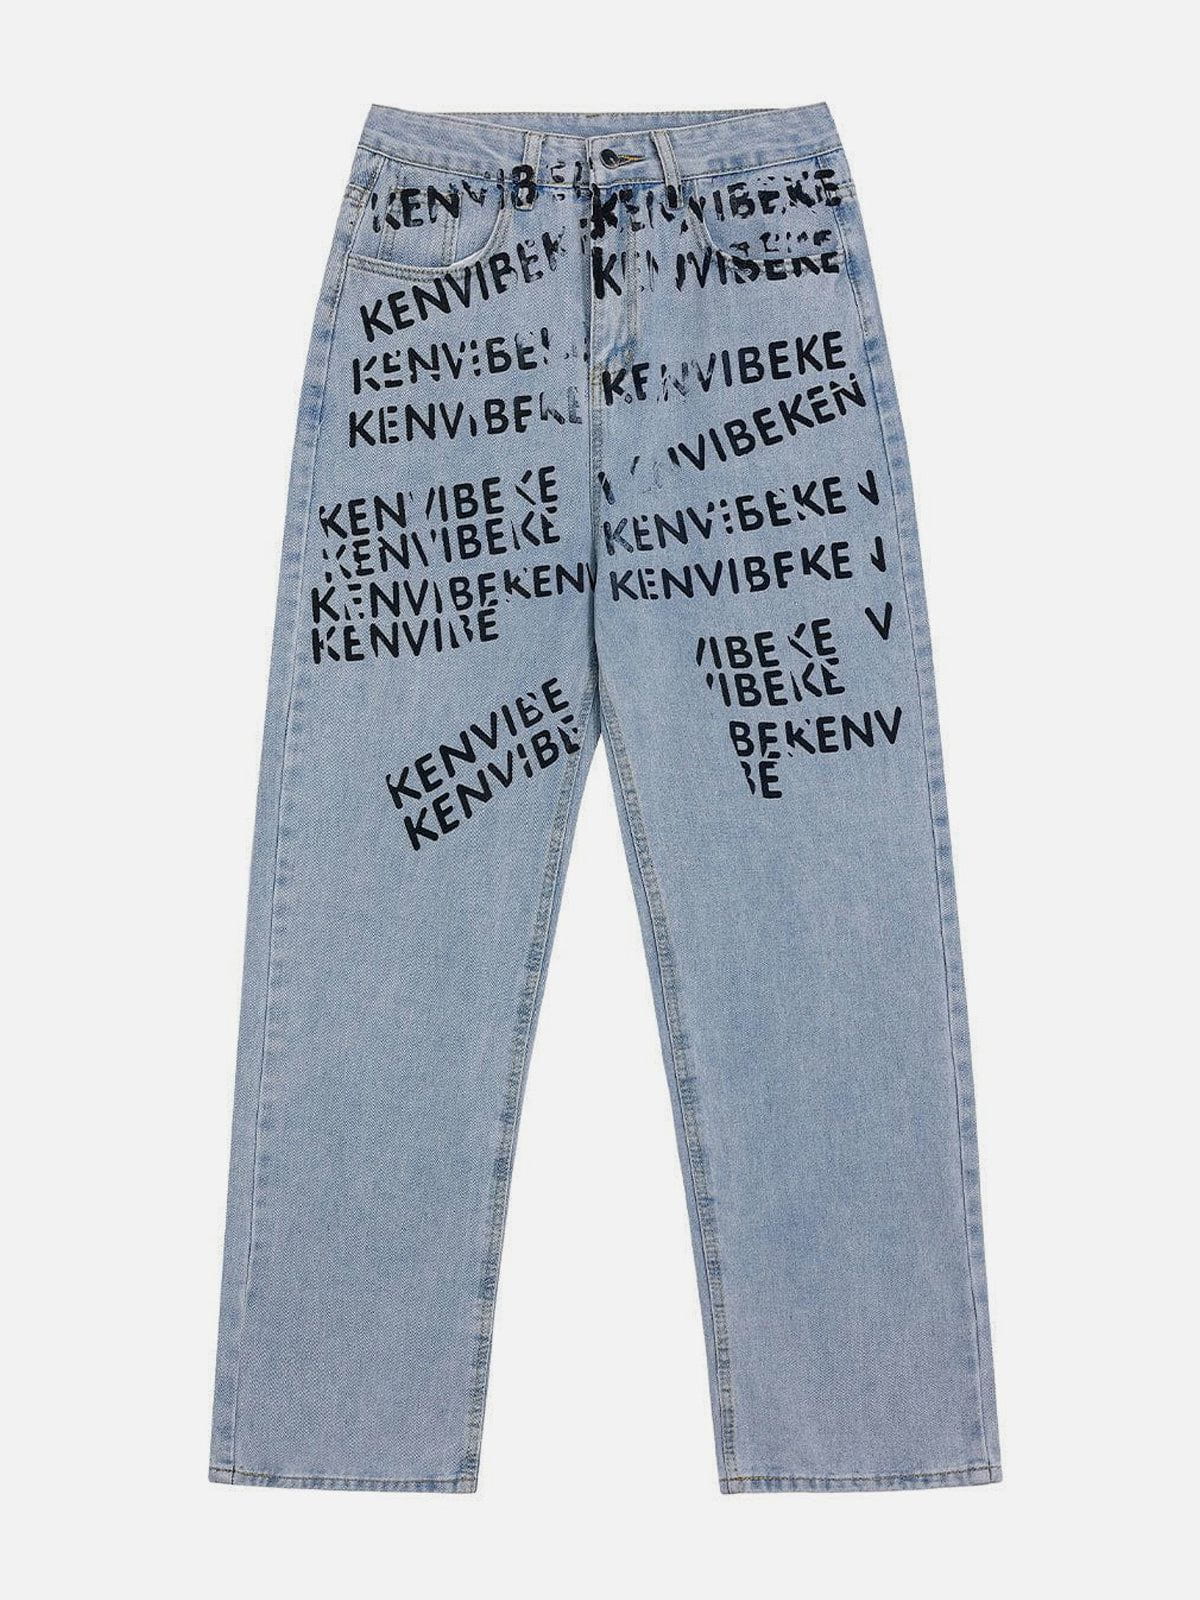 Eprezzy® - Letters Printing Jeans Streetwear Fashion - eprezzy.com